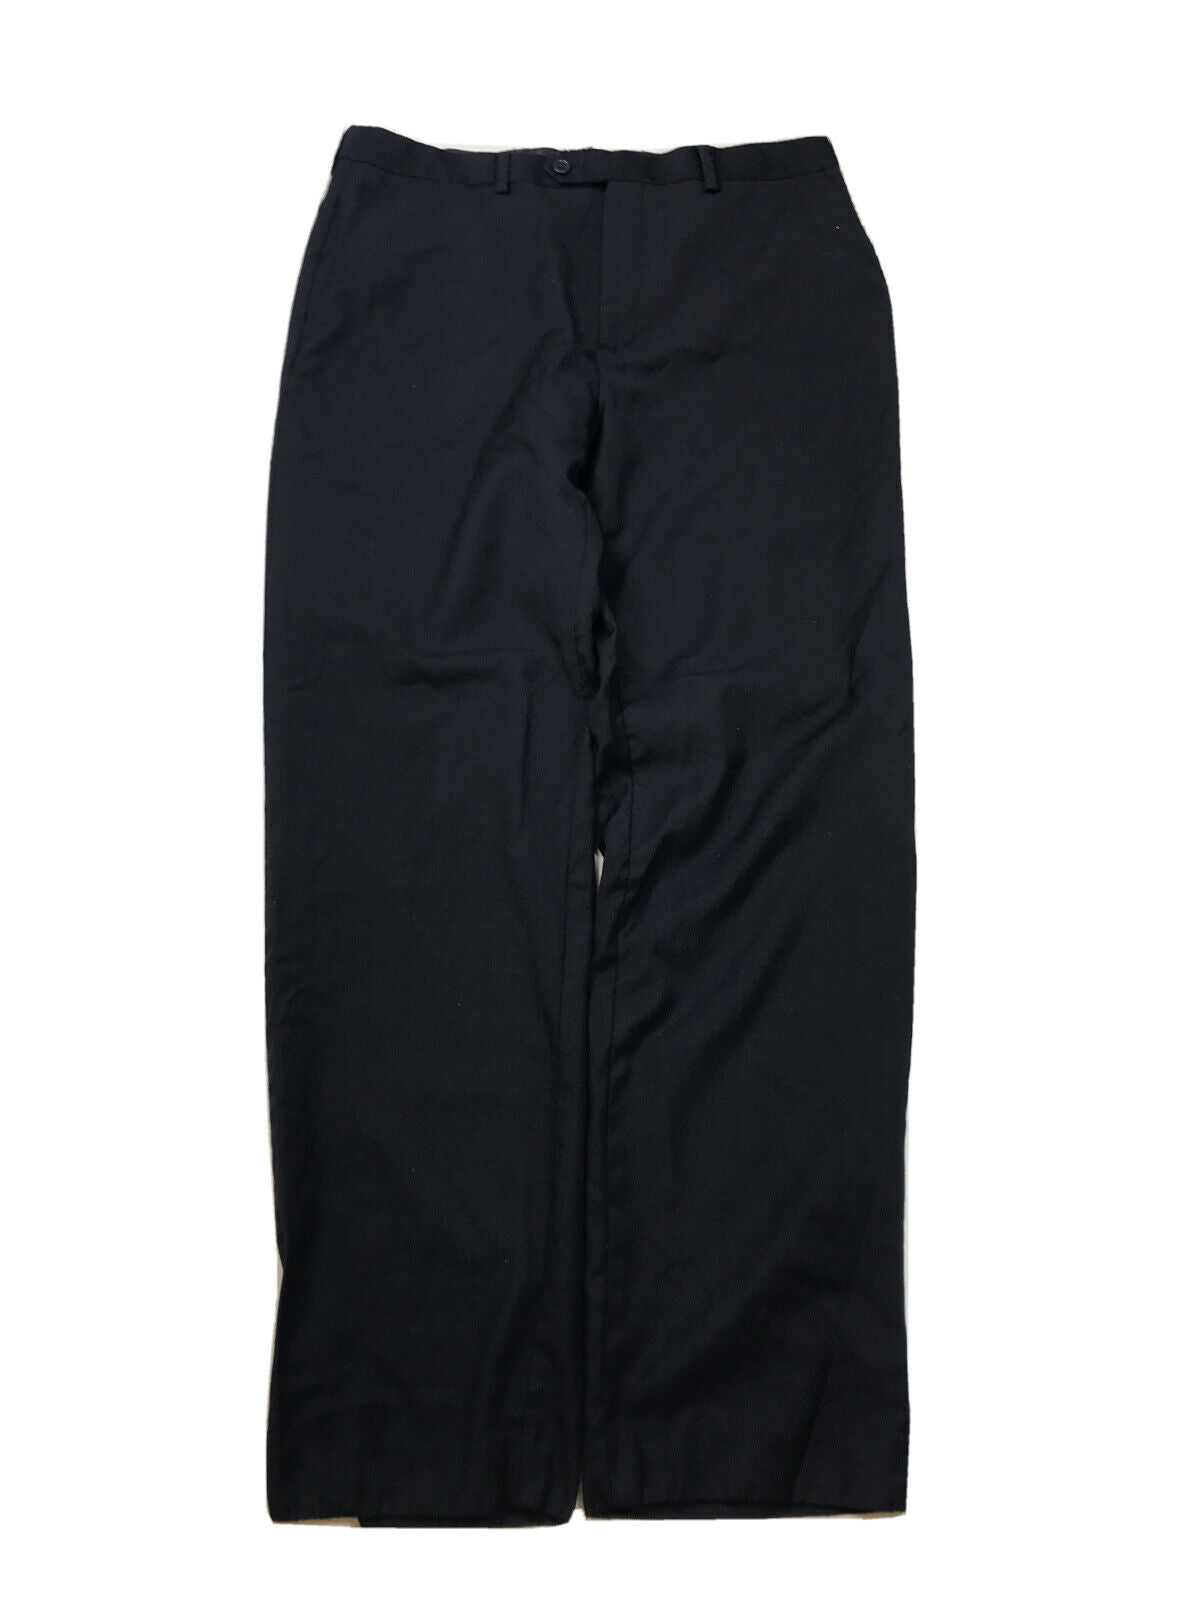 Michael Kors Men's Black 100% Wool Dress Pants - 34x32 – The Resell Club